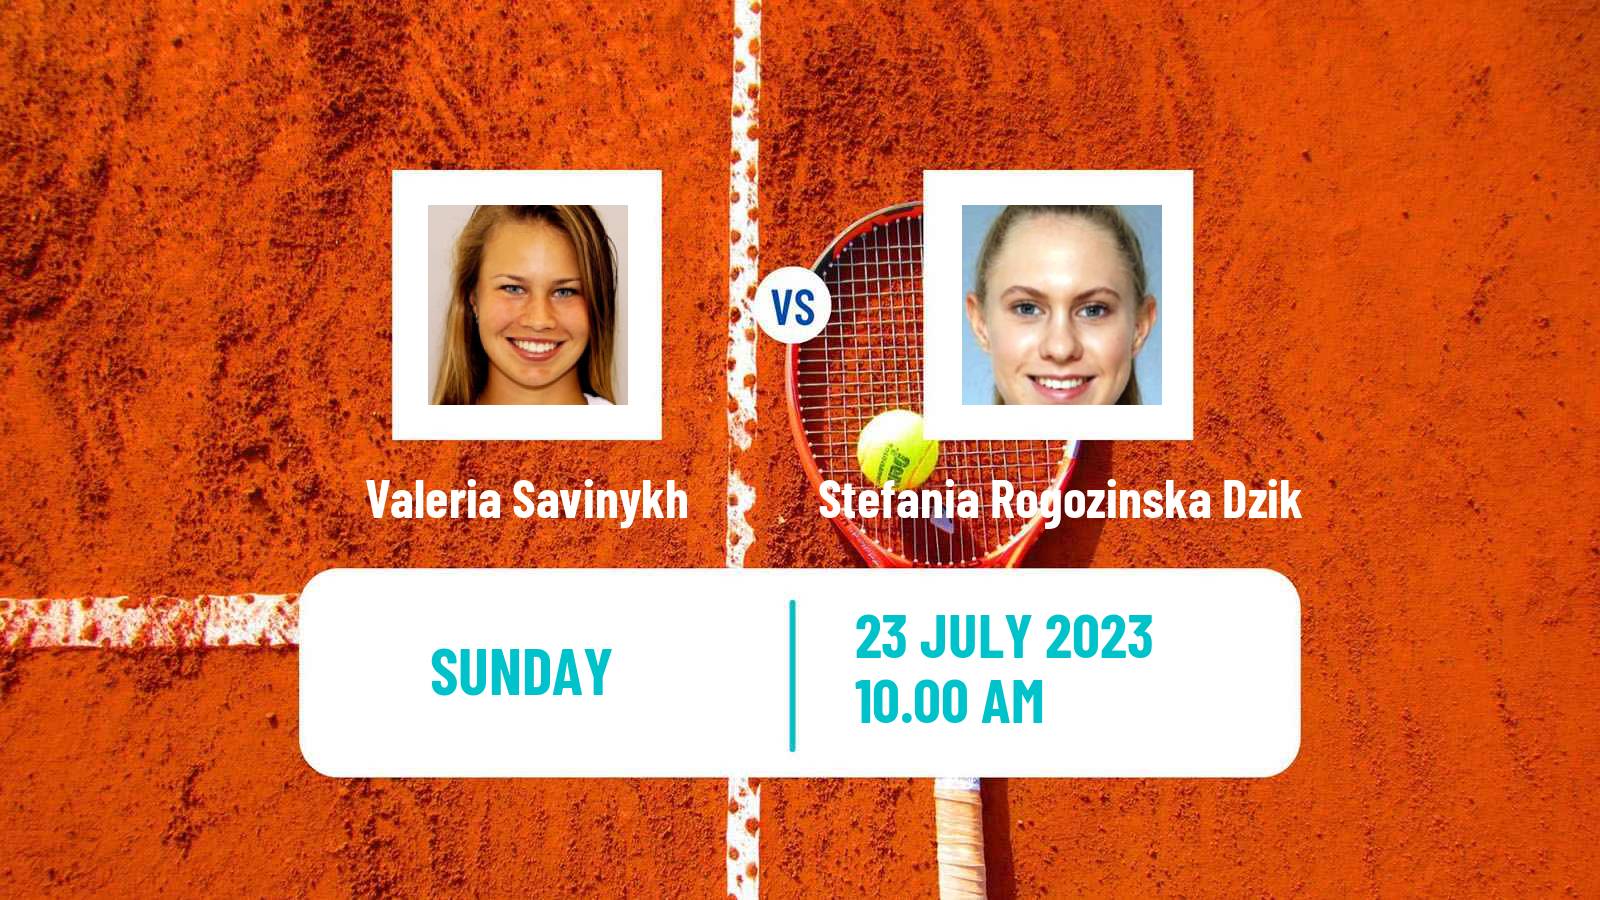 Tennis WTA Warsaw Valeria Savinykh - Stefania Rogozinska Dzik